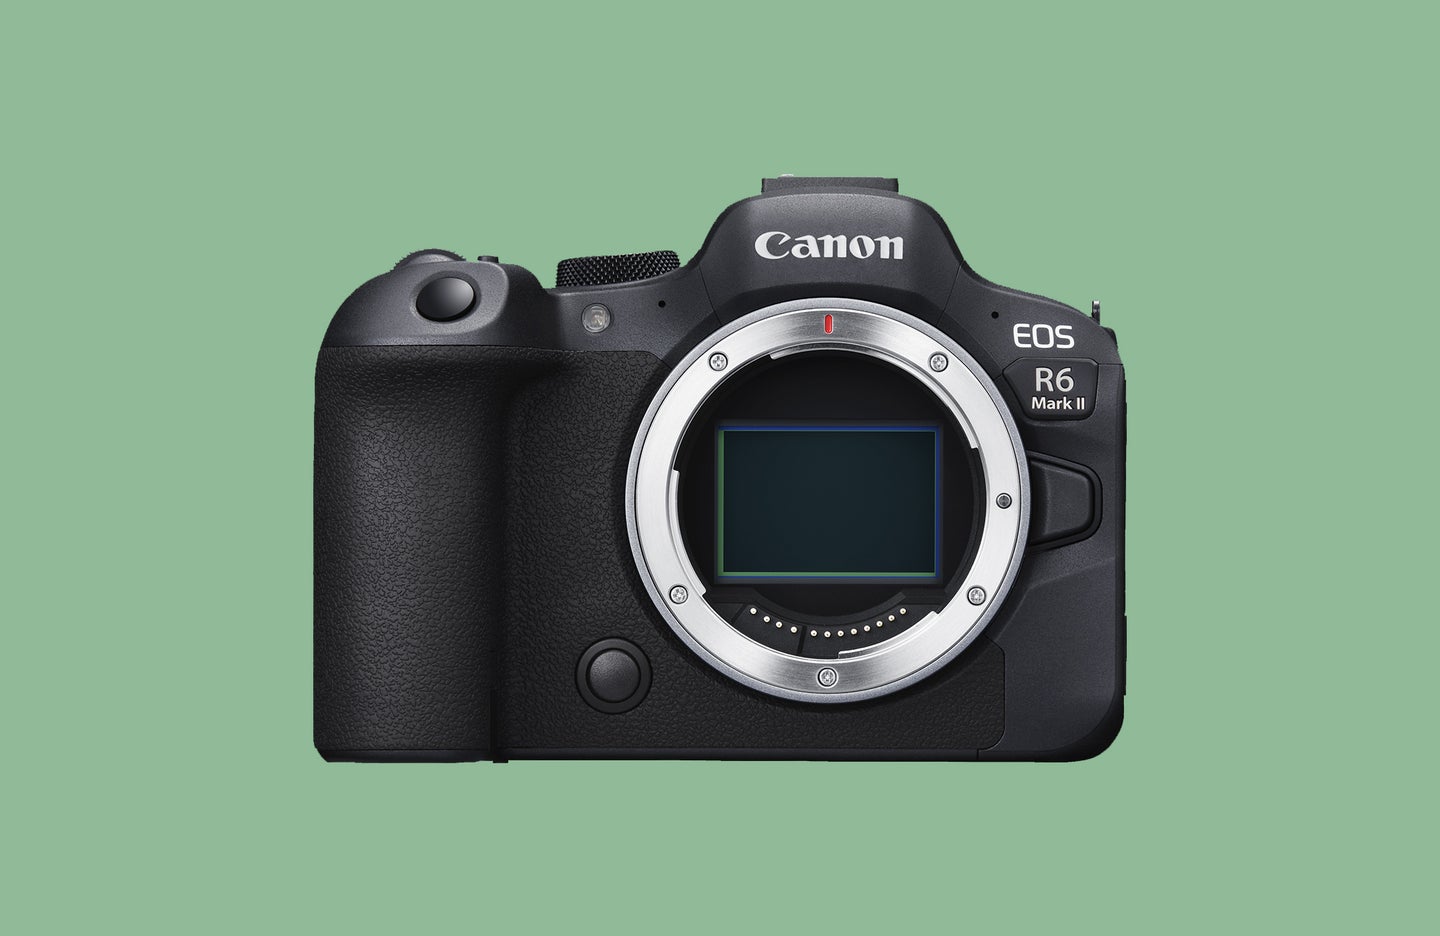 Canon has announced the EOS R6 Mark II full-frame mirrorless camera.